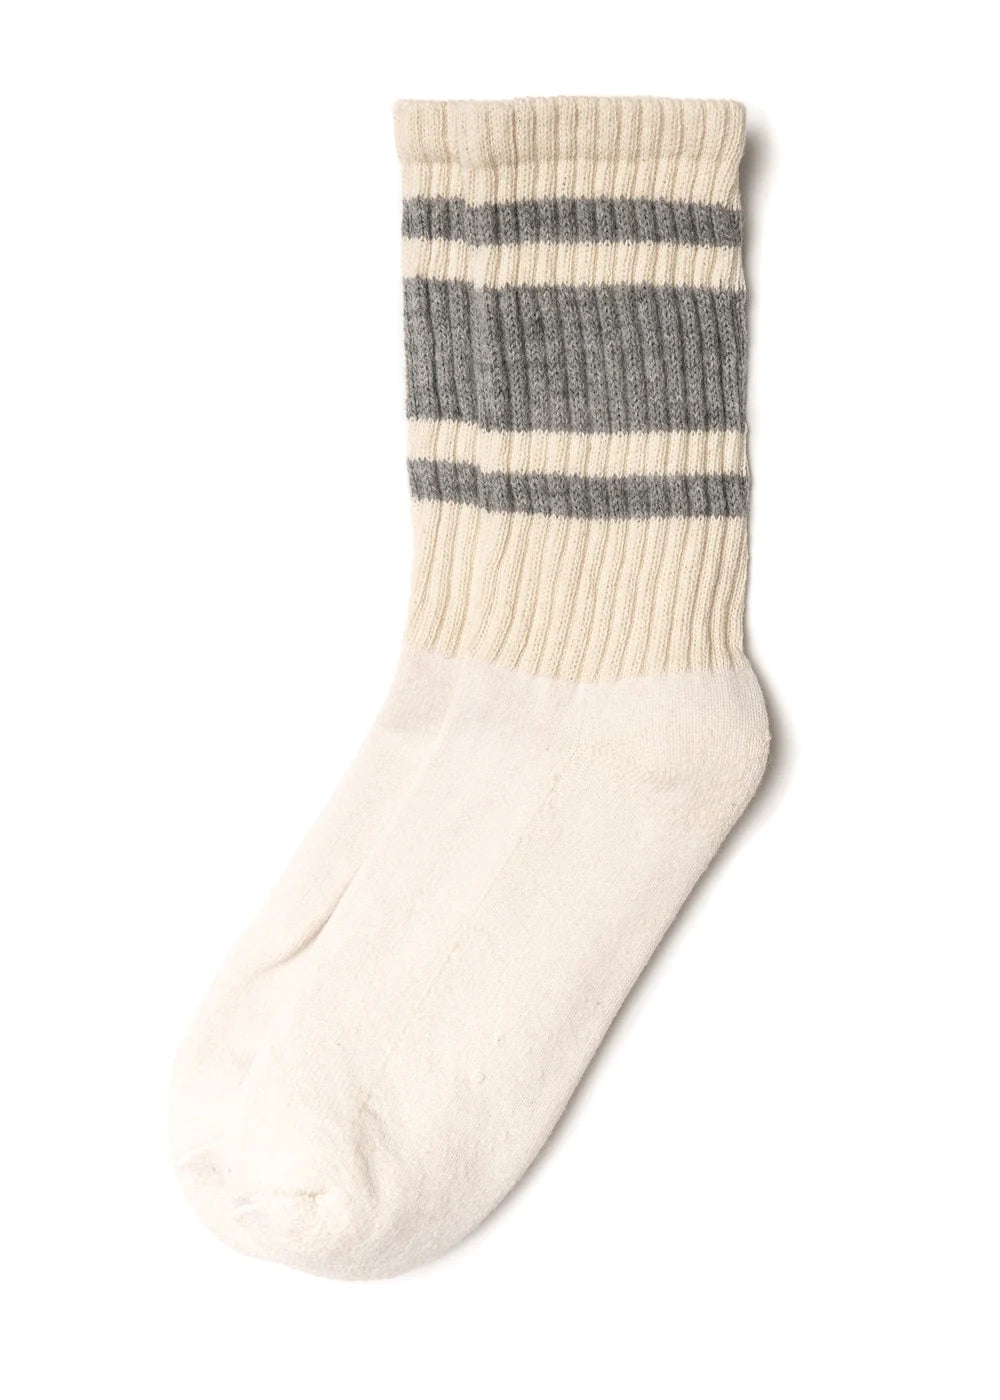 American trench - the mono stripe sock  - heather grey